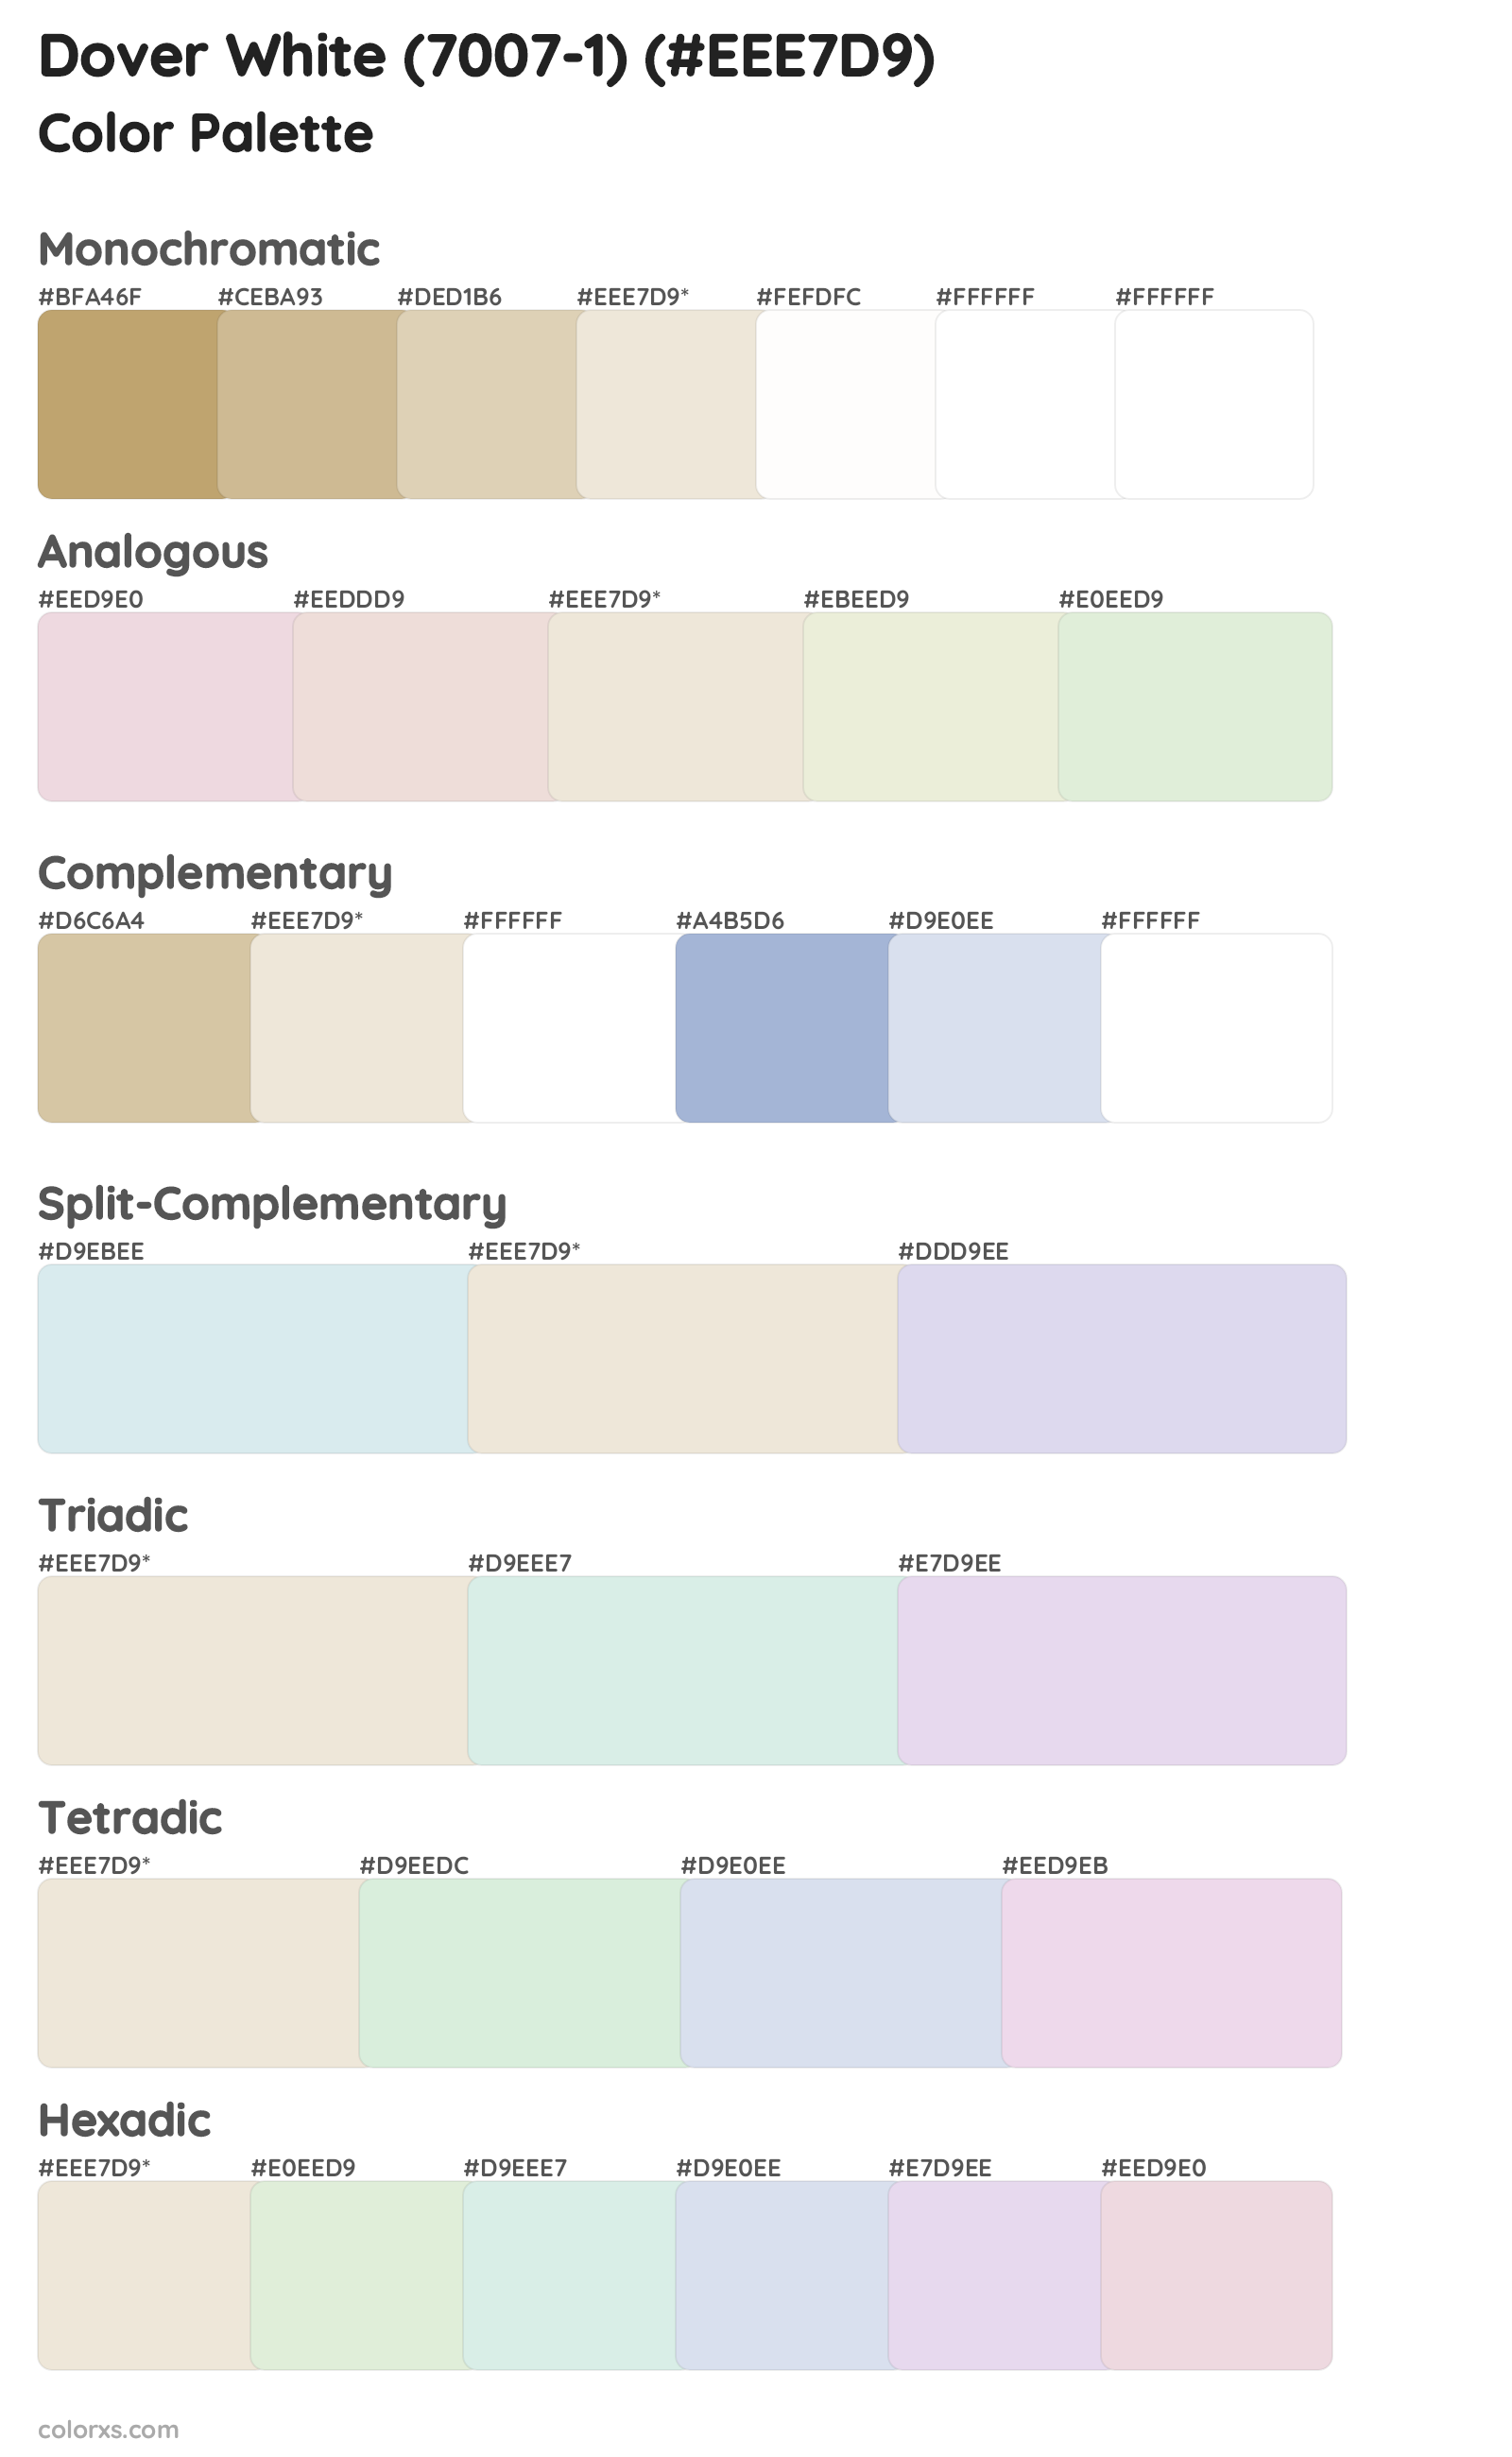 Dover White (7007-1) Color Scheme Palettes